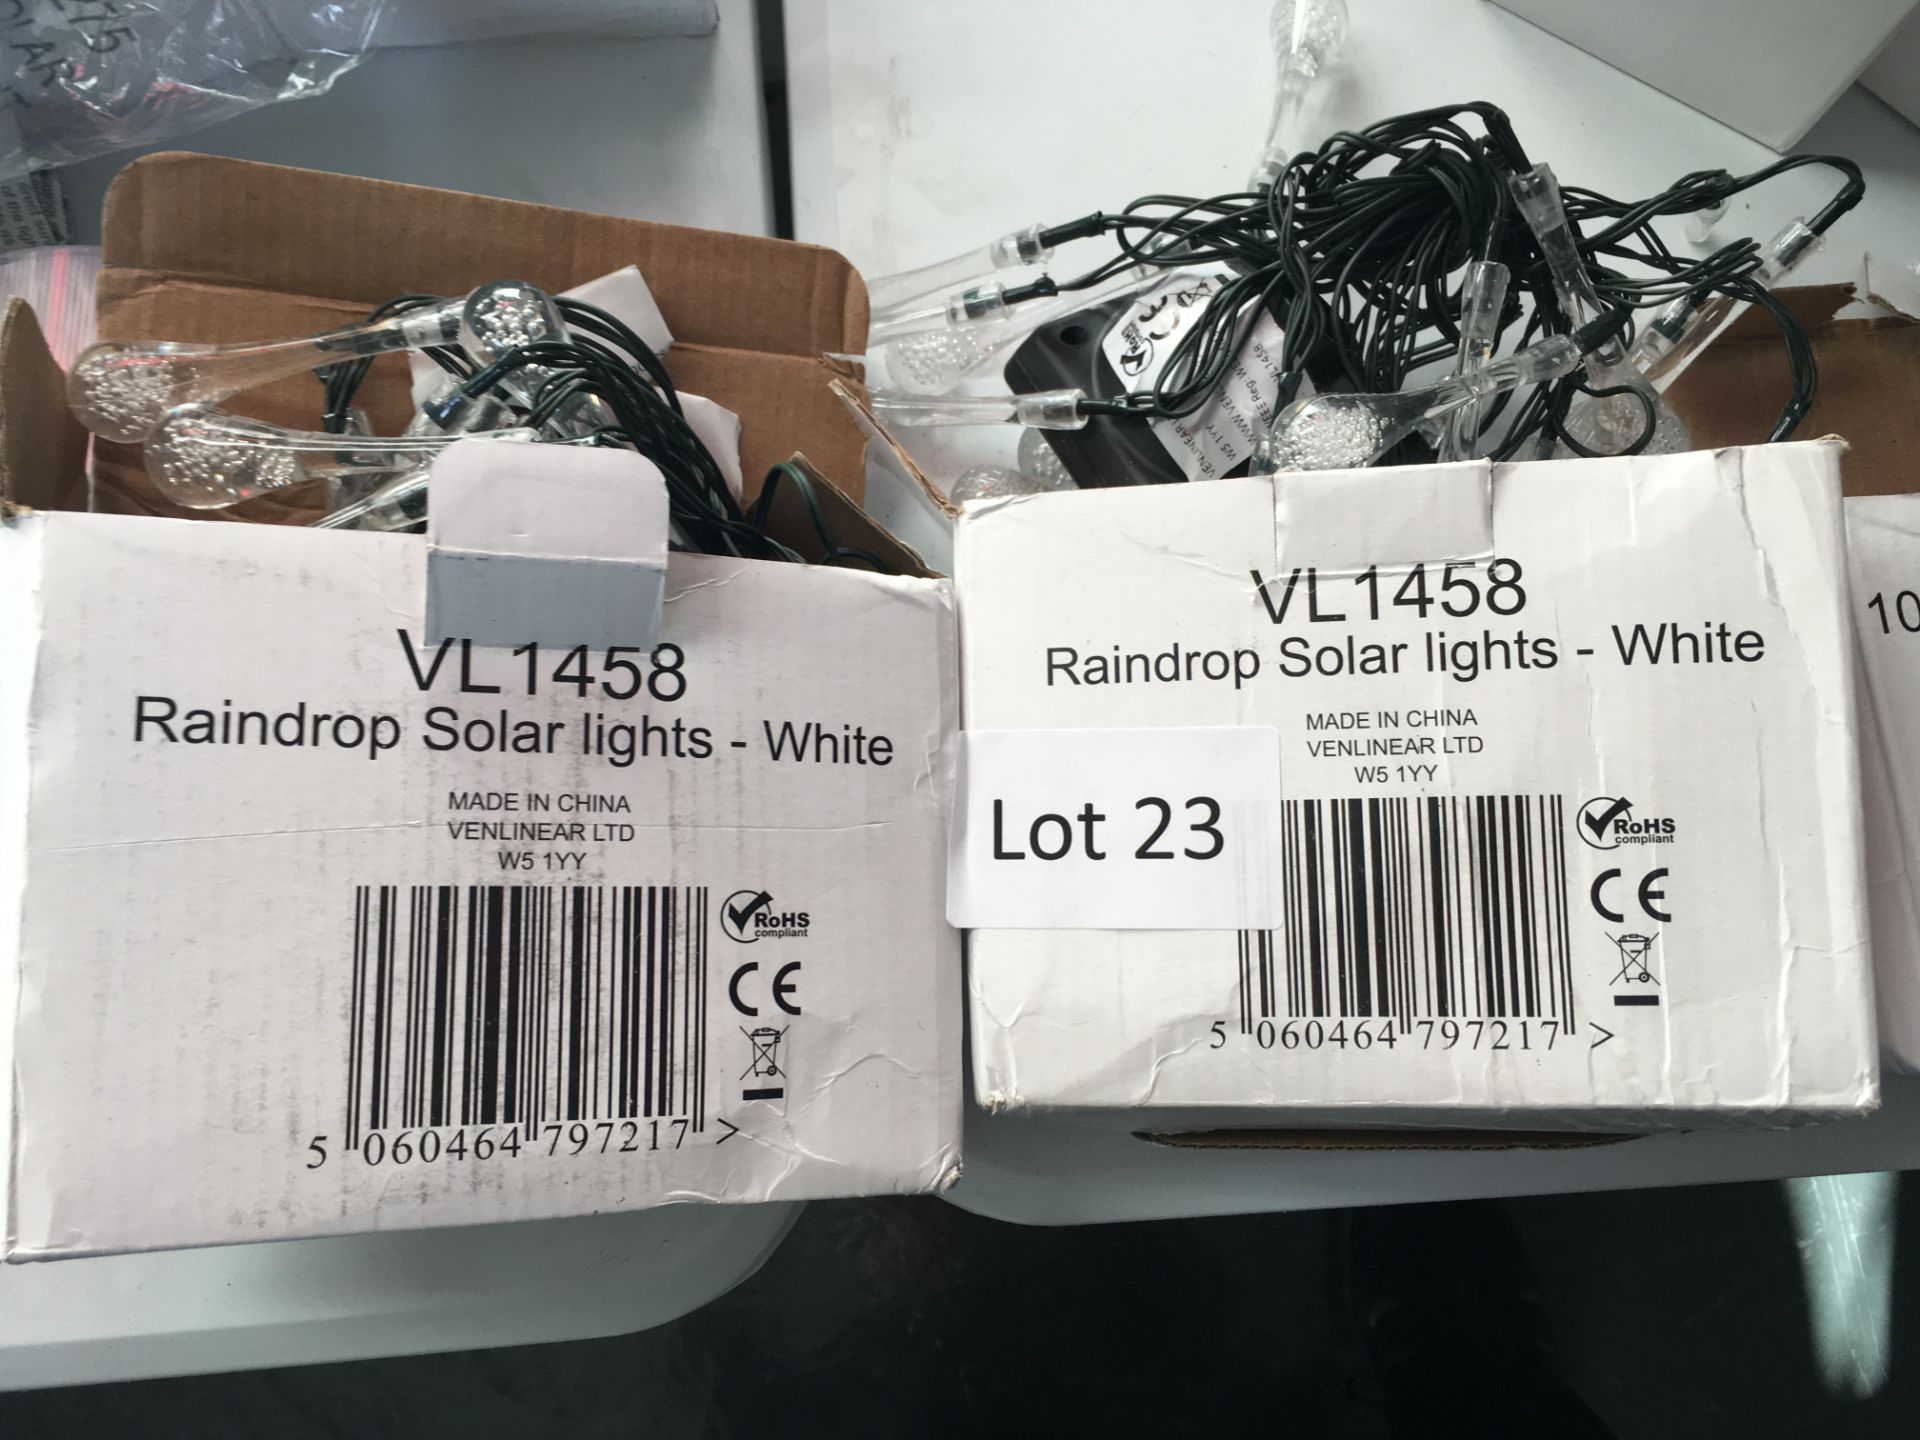 2 x raindrop solar lights. Bad packaging.